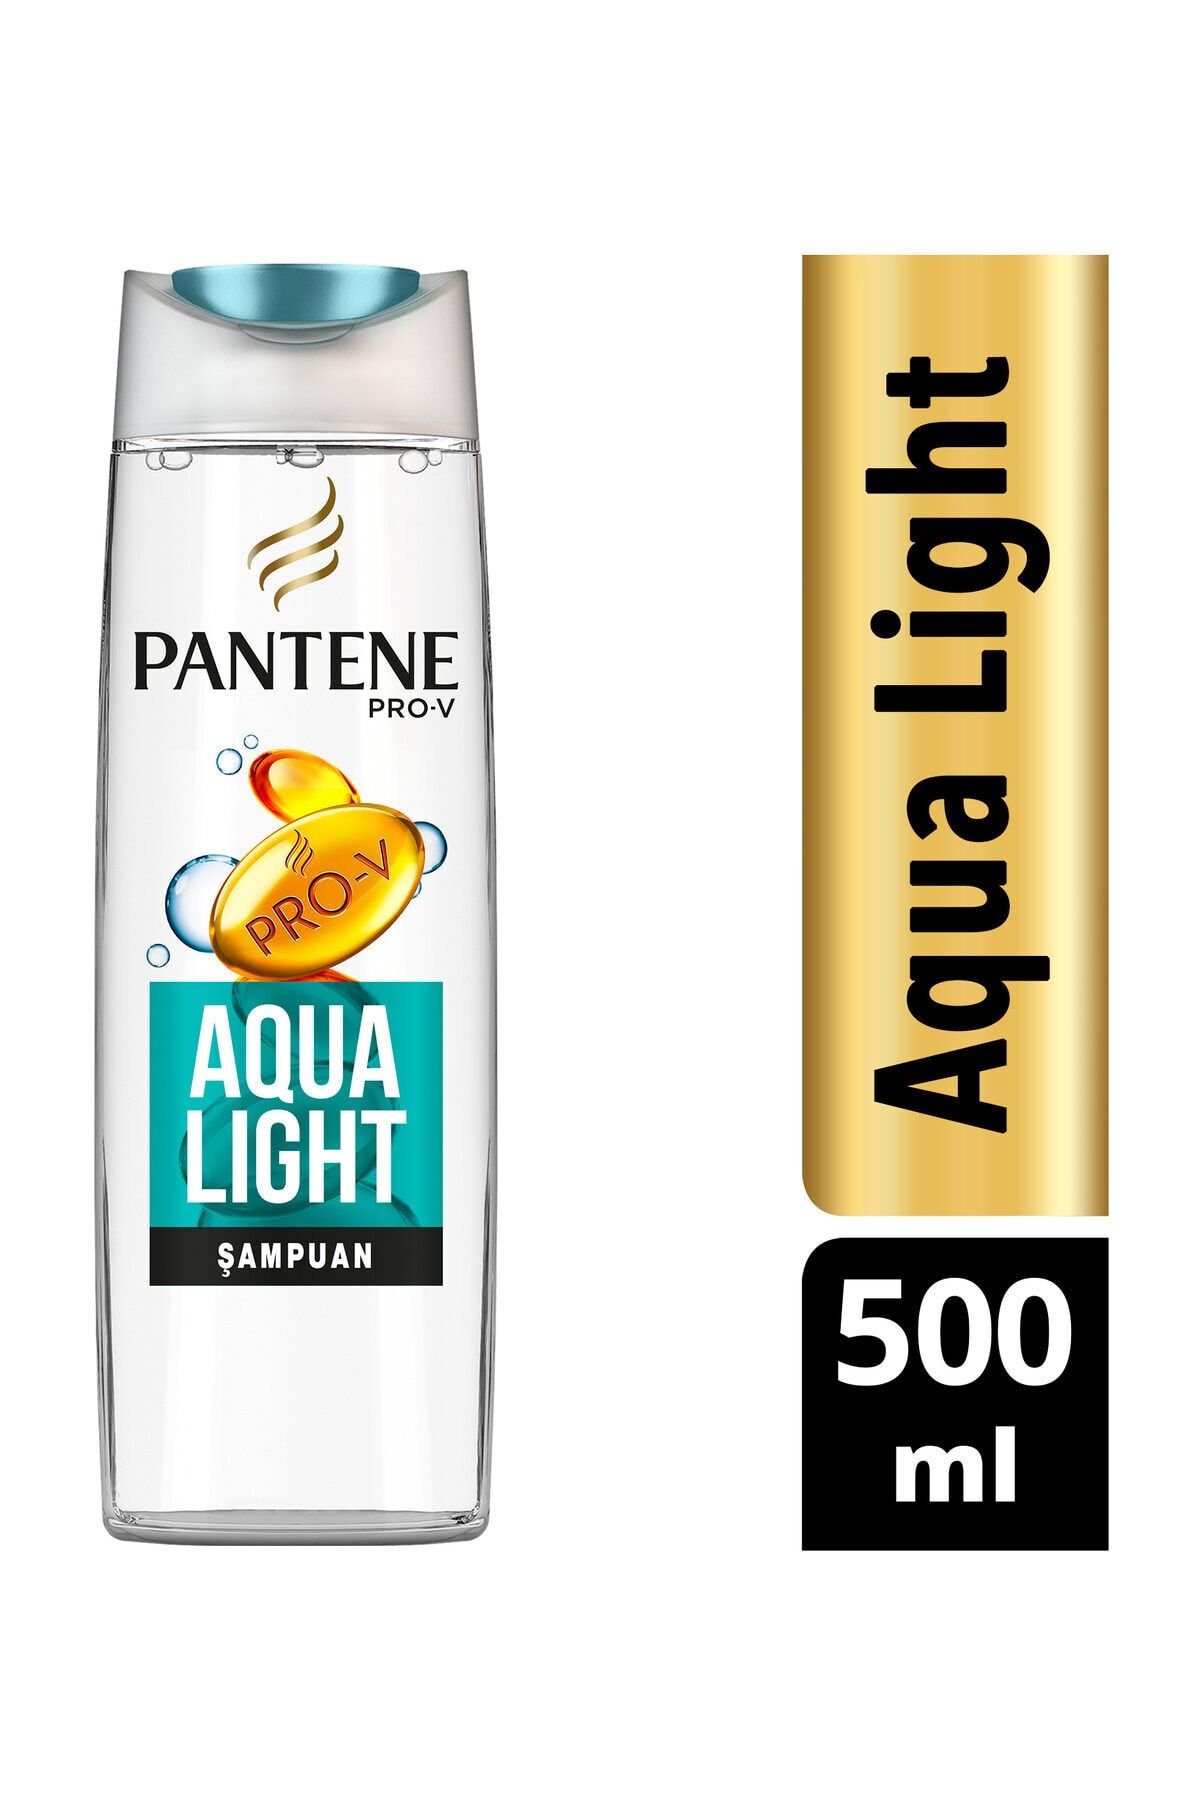 Pantene Şampuan Aqualight 500 ml